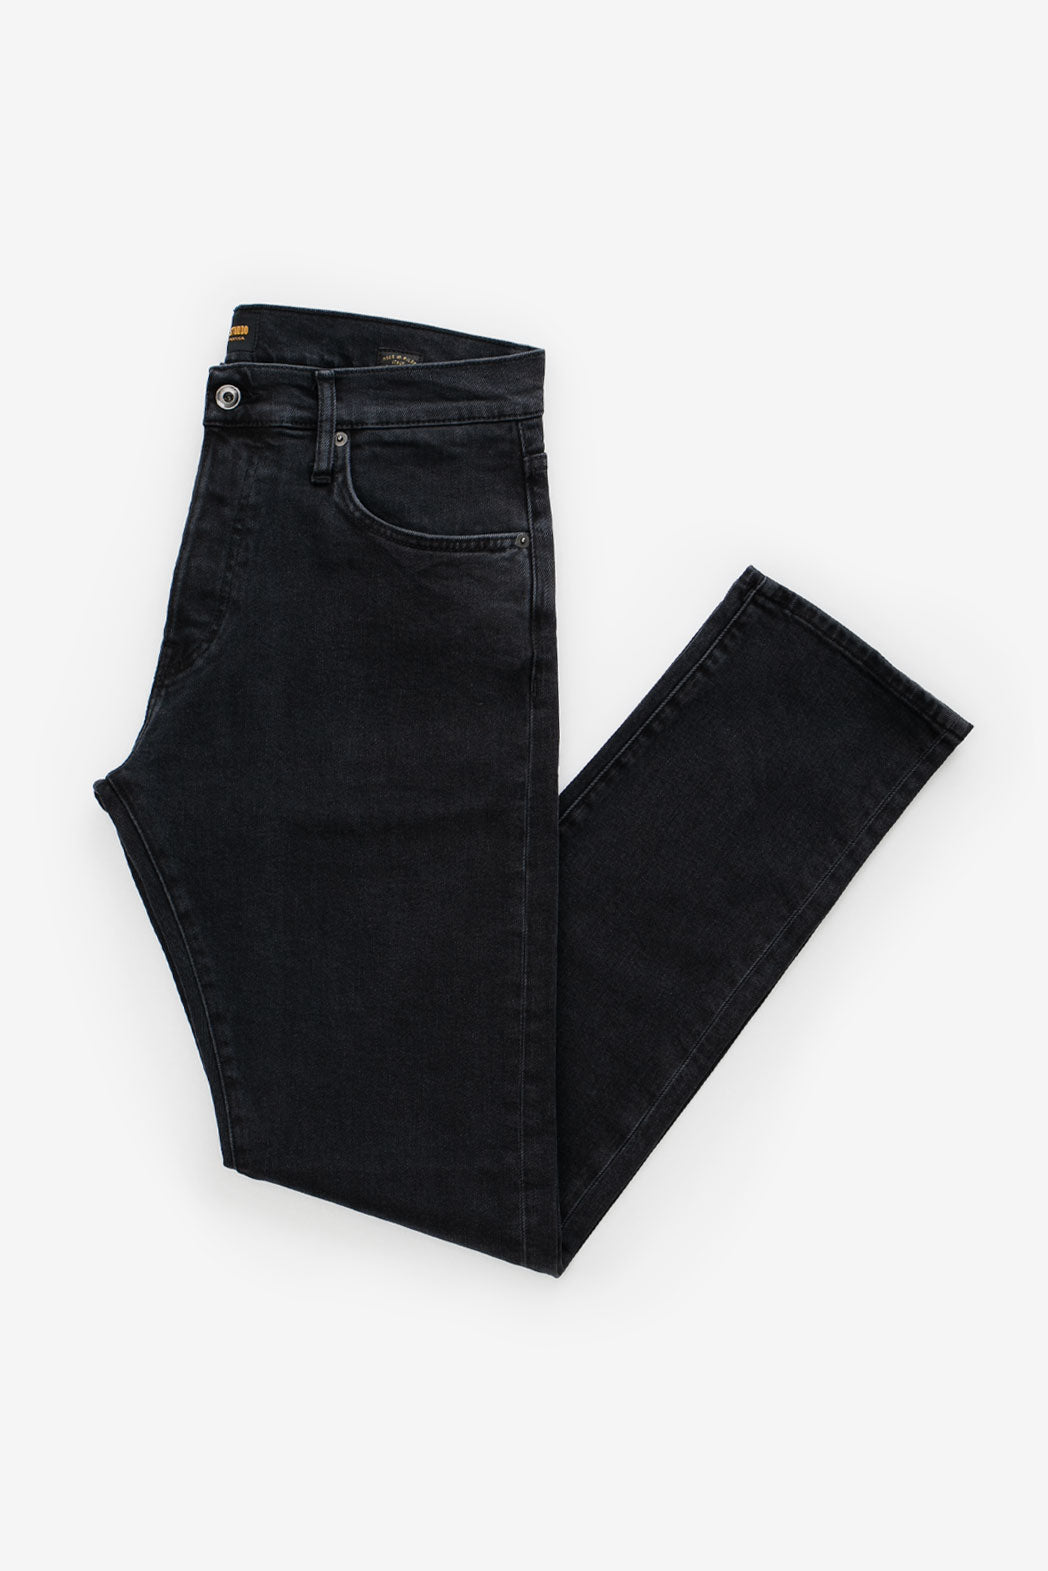 COF Studio M7 Tapered Organic Black jeans